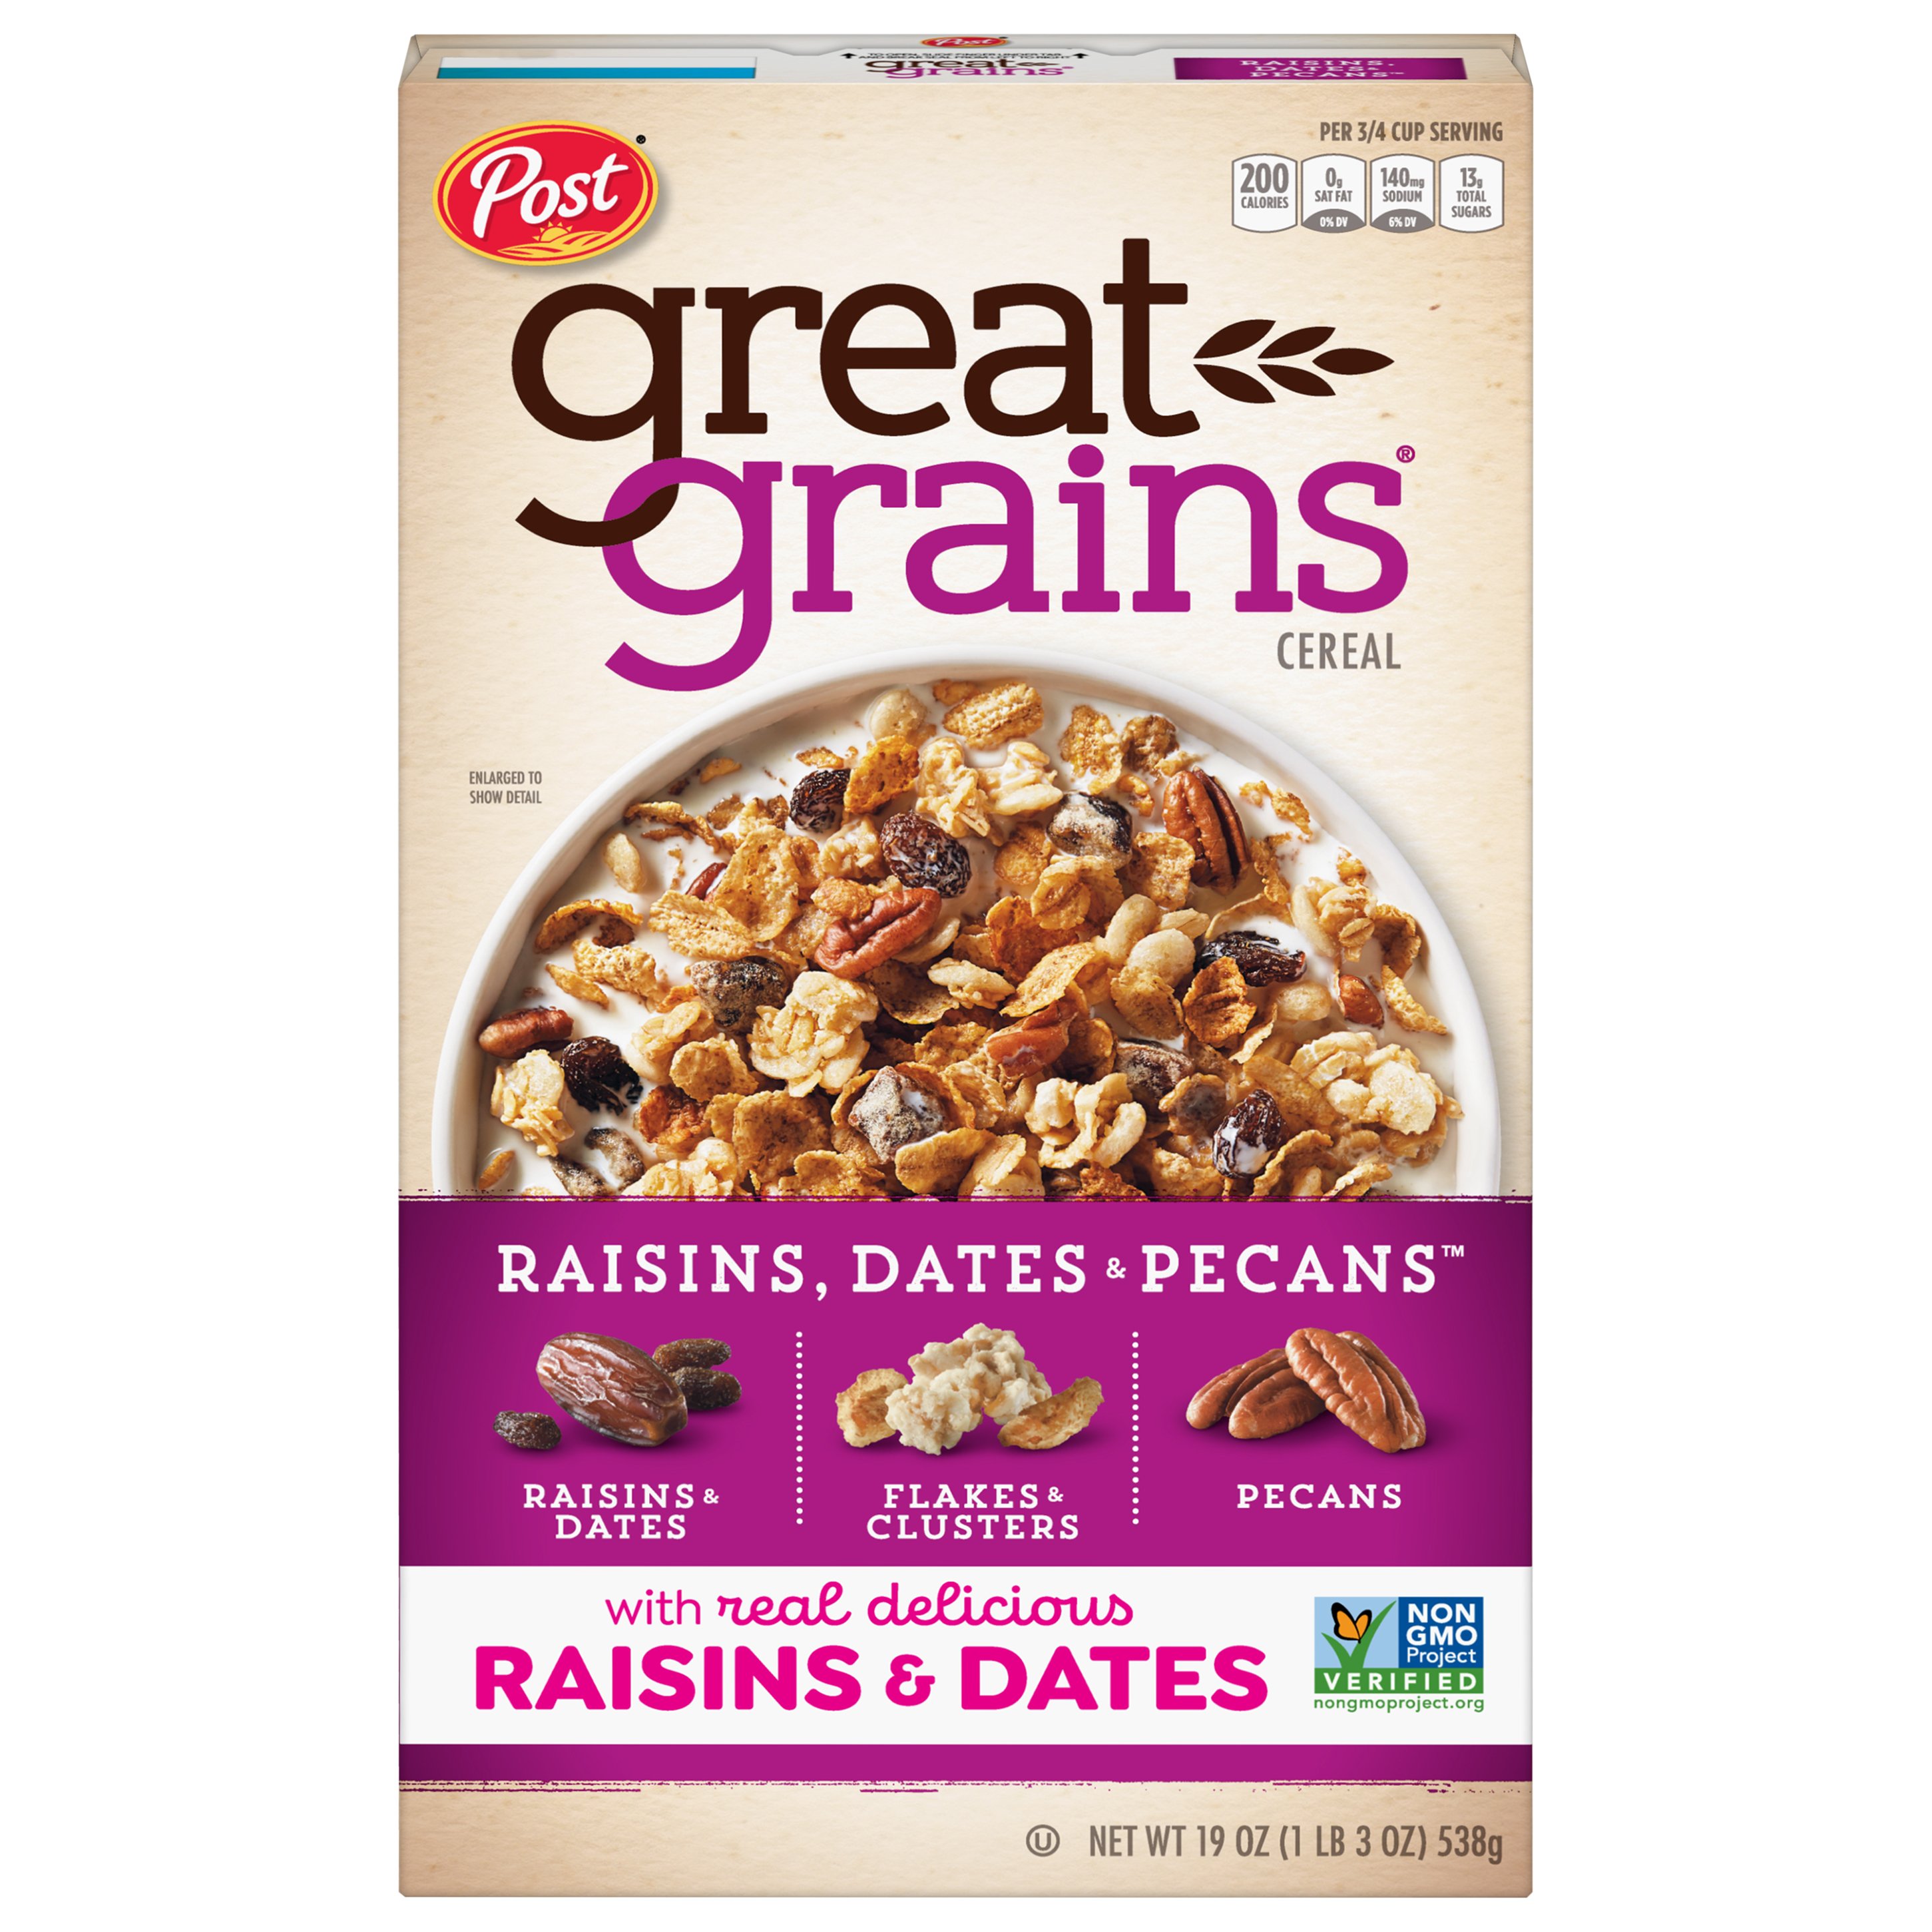 Post Great Grains Raisins Dates & Pecans Cereal - Shop Cereal at H-E-B